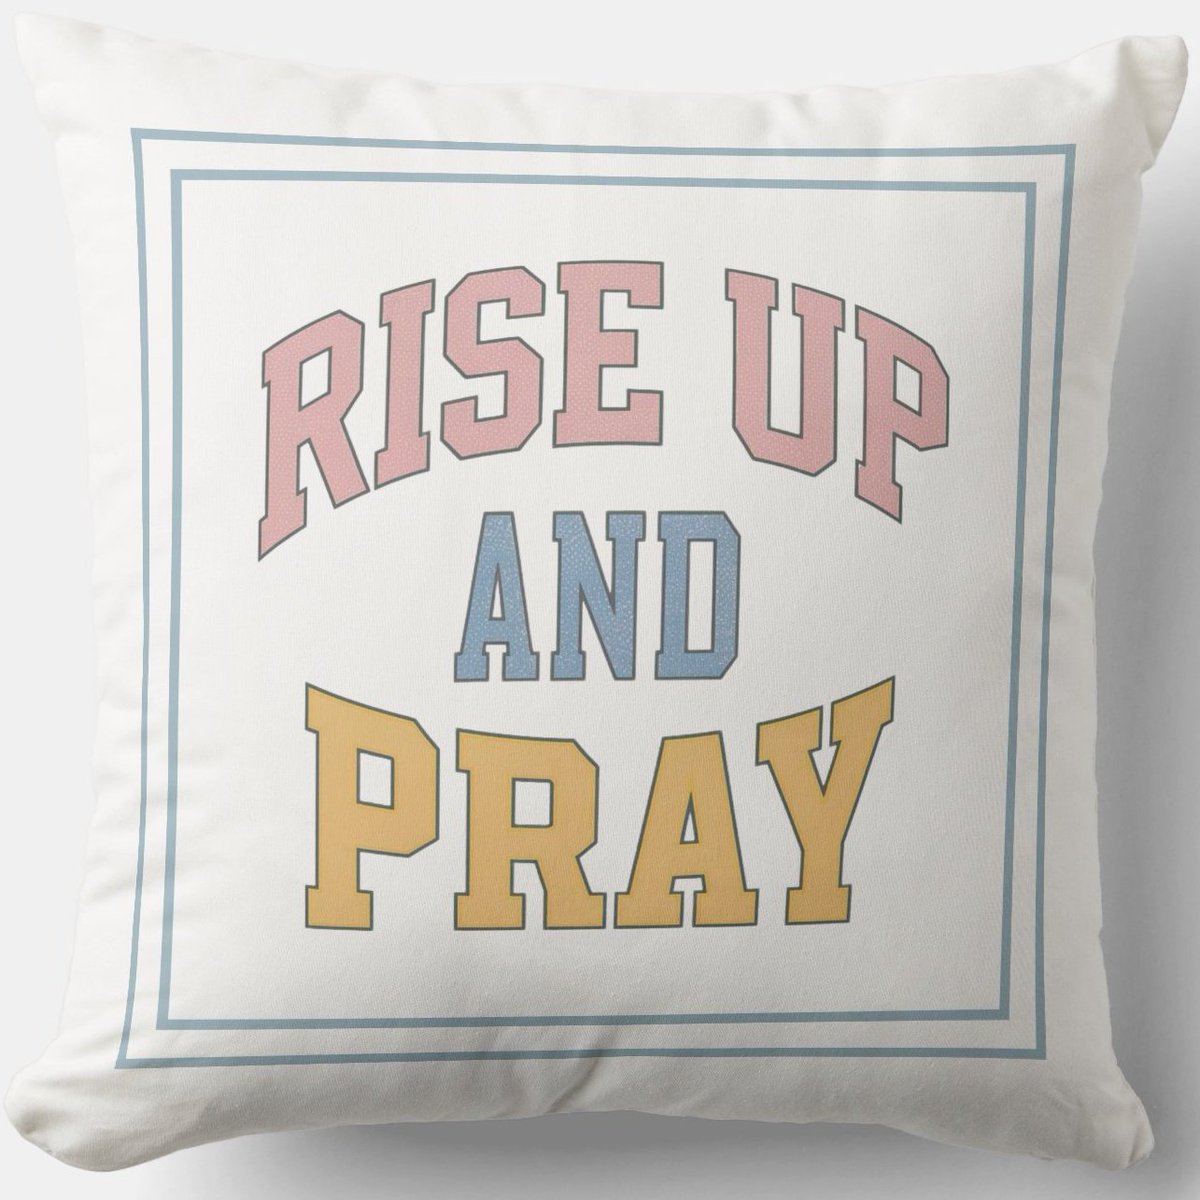 Rise Up and Pray #Cushion zazzle.com/embrace_the_da… Embrace the Day #Pillow #Blessing #JesusChrist #JesusSaves #Jesus #christian #spiritual #Homedecoration #uniquegift #giftideas #MothersDayGifts #giftformom #giftidea #HolySpirit #pillows #giftshop #giftsforher #giftsformom #prayer